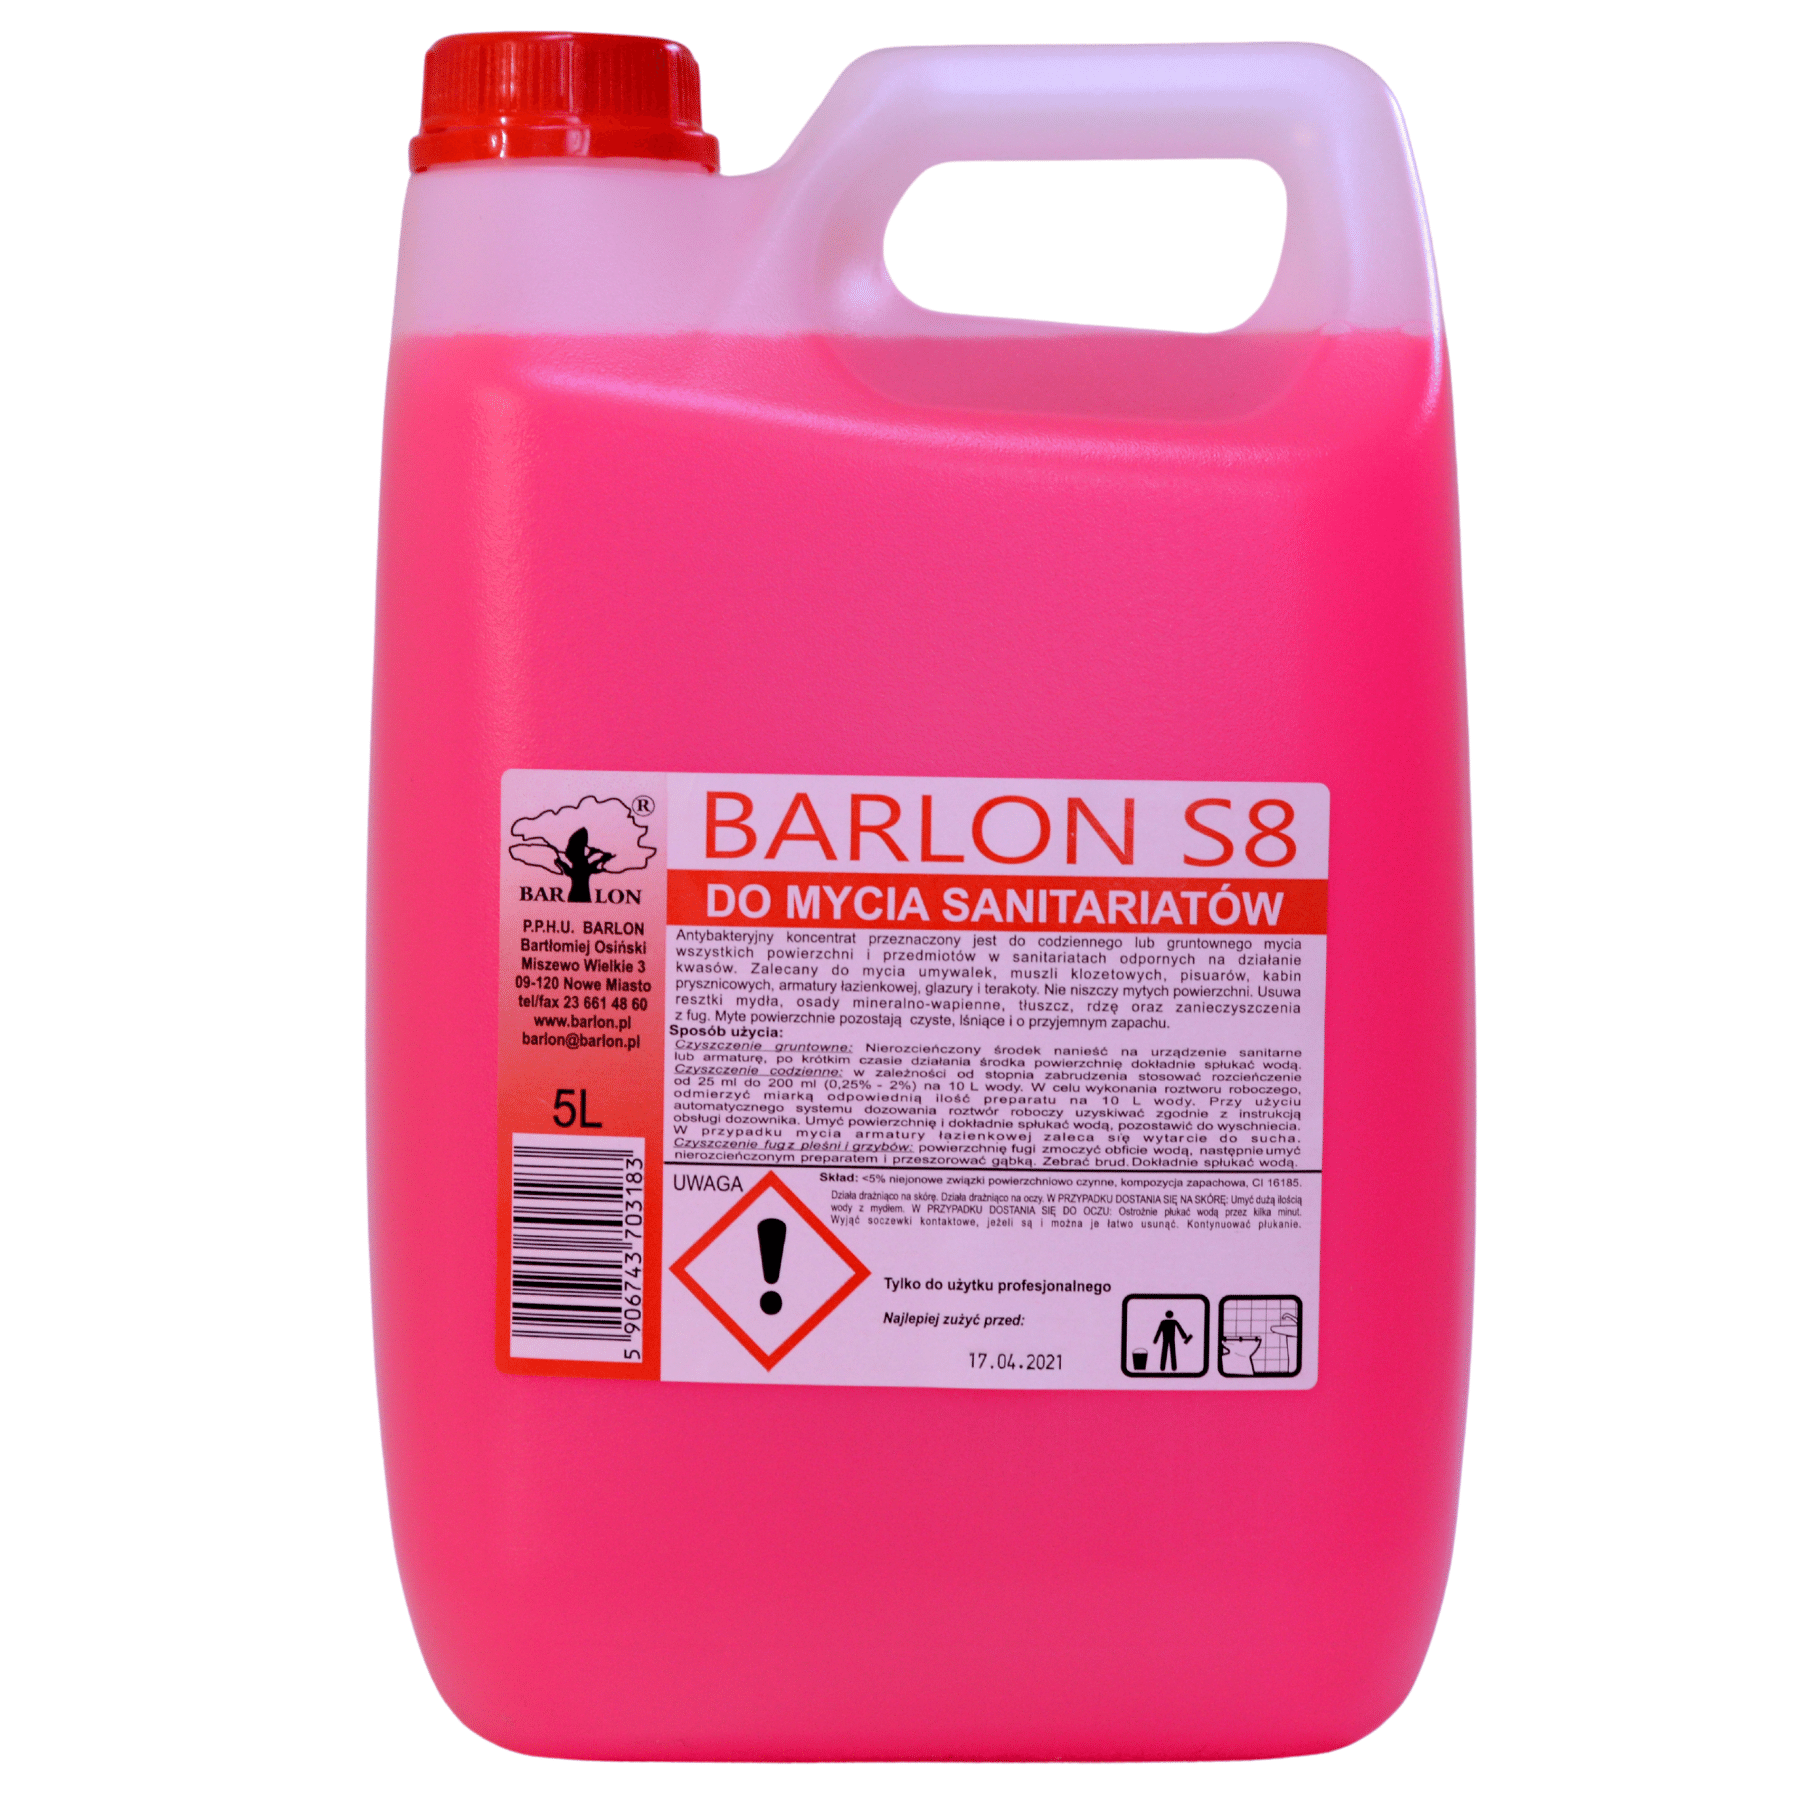 Barlon S8 koncentrat do mycia sanitariatów 5 l